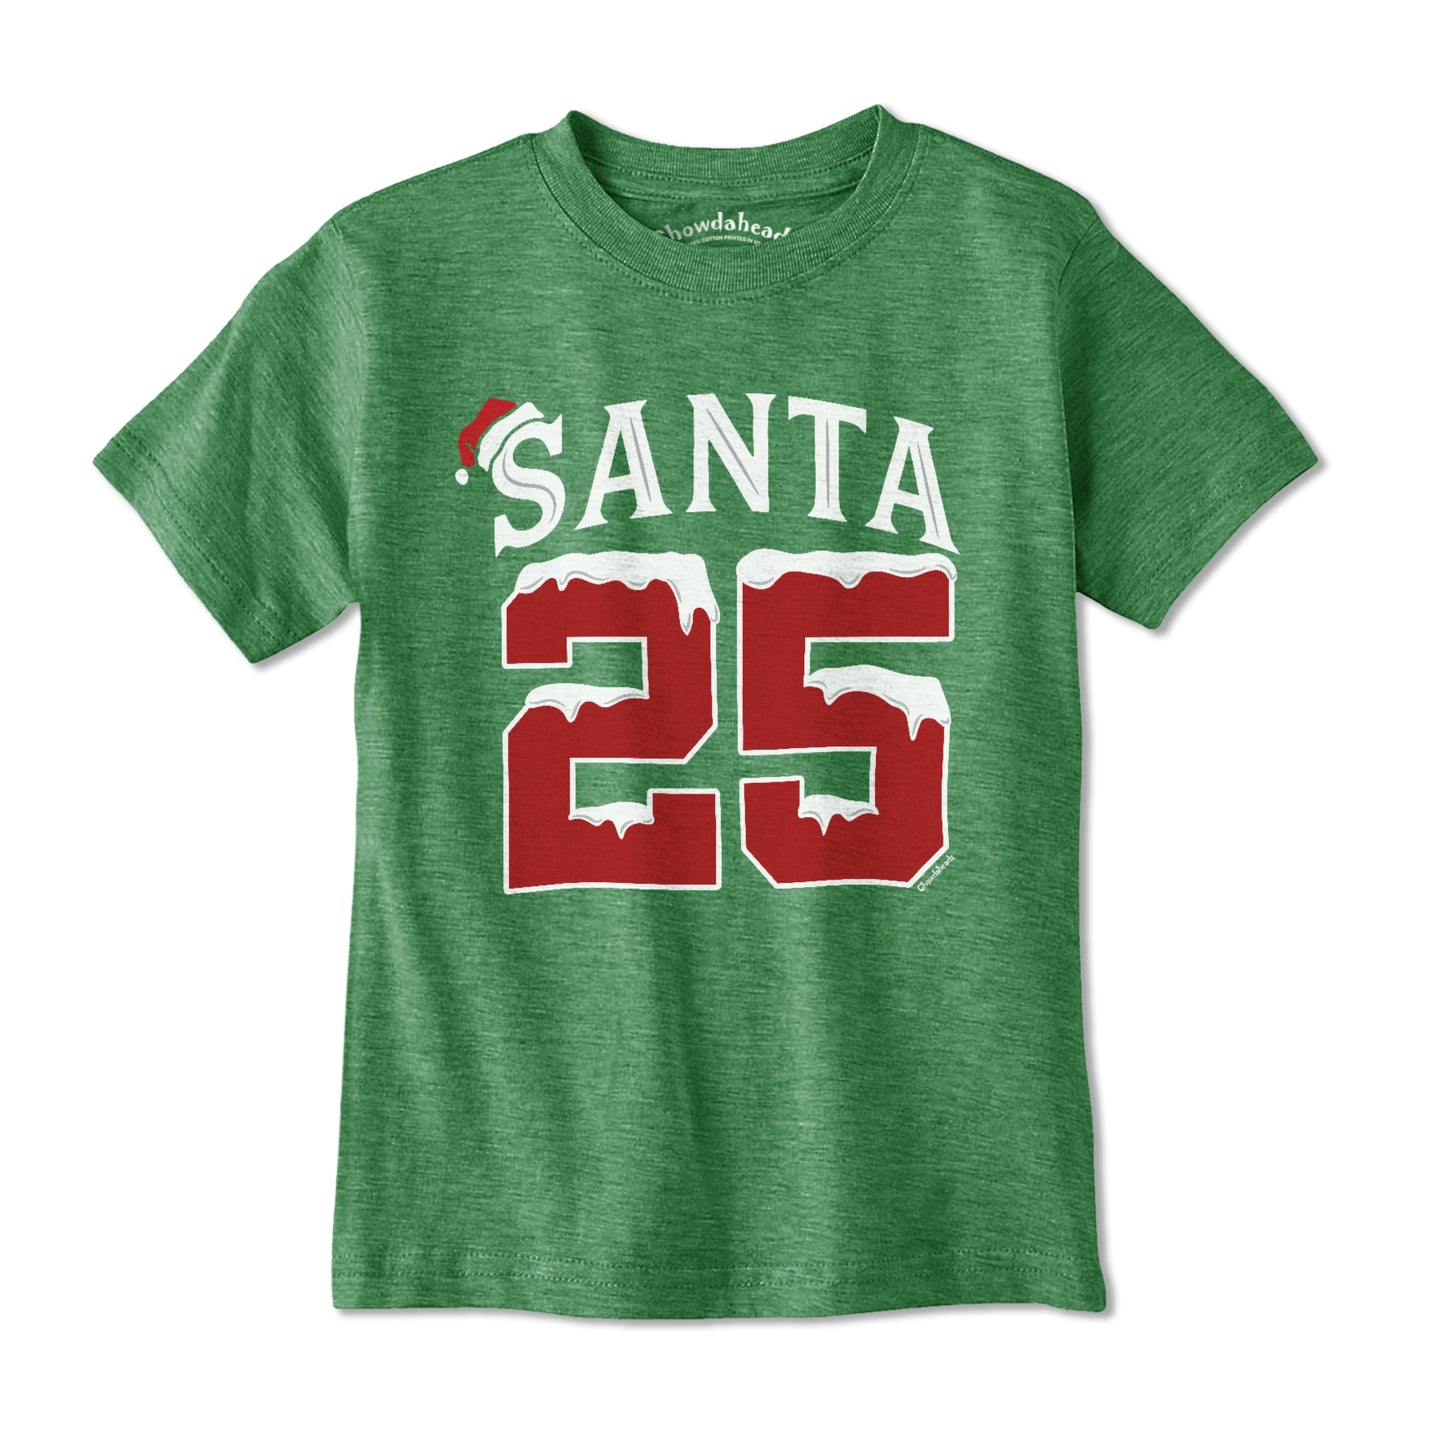 Santa 25 Alter Ego Youth T-Shirt - Chowdaheadz